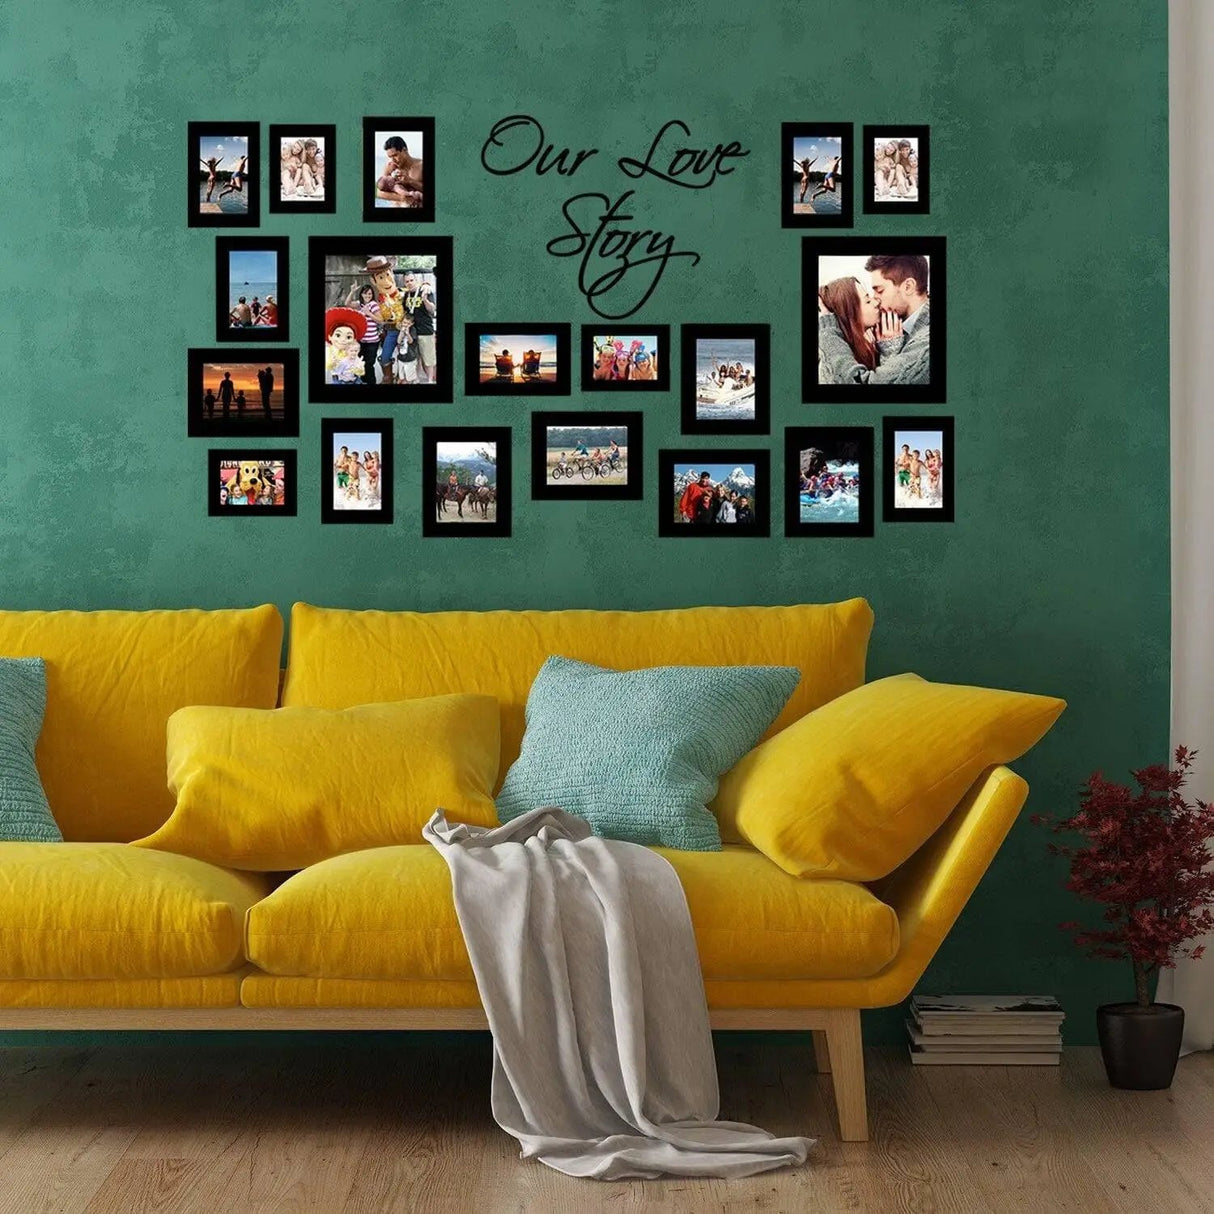 Wall Frame Sticker - Picture Frames Stickers - Photo Vinyl Decals - Polaroid Mini Family Decorated Decal - Photos Diy Interior Set Decor Art - Decords